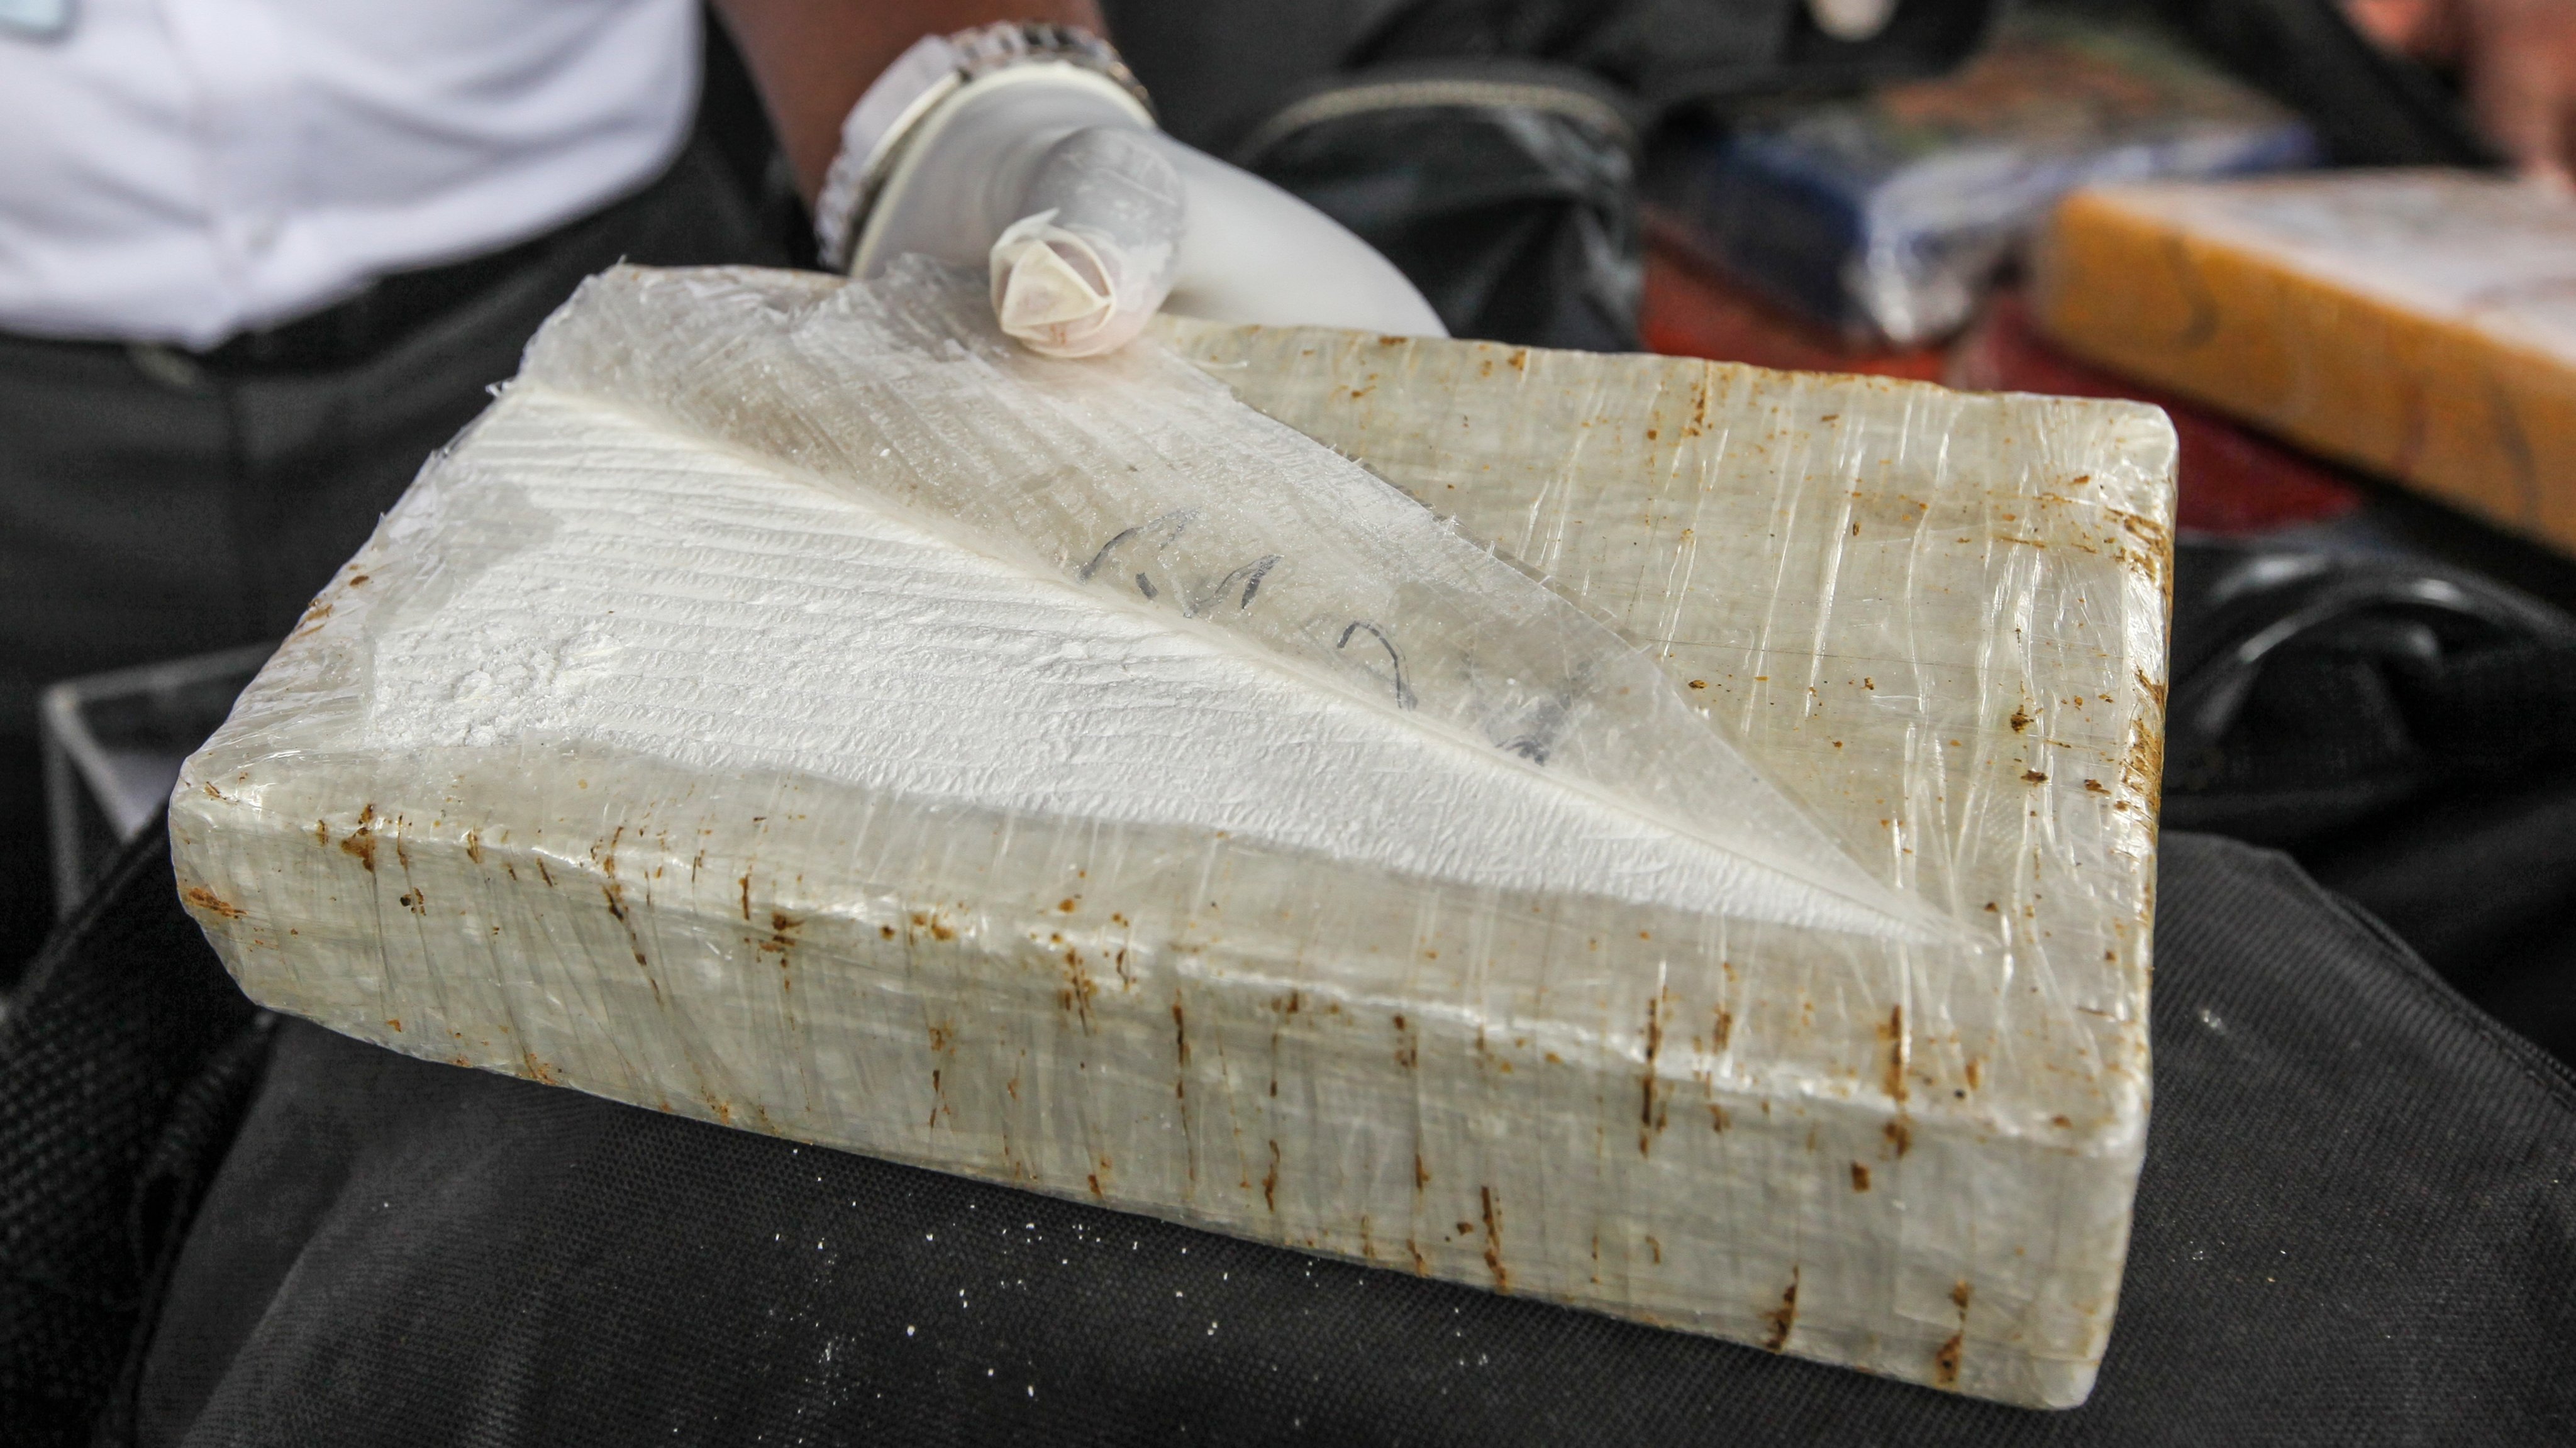 Sri Lankan customs seizes container carrying Brazilian cocaine